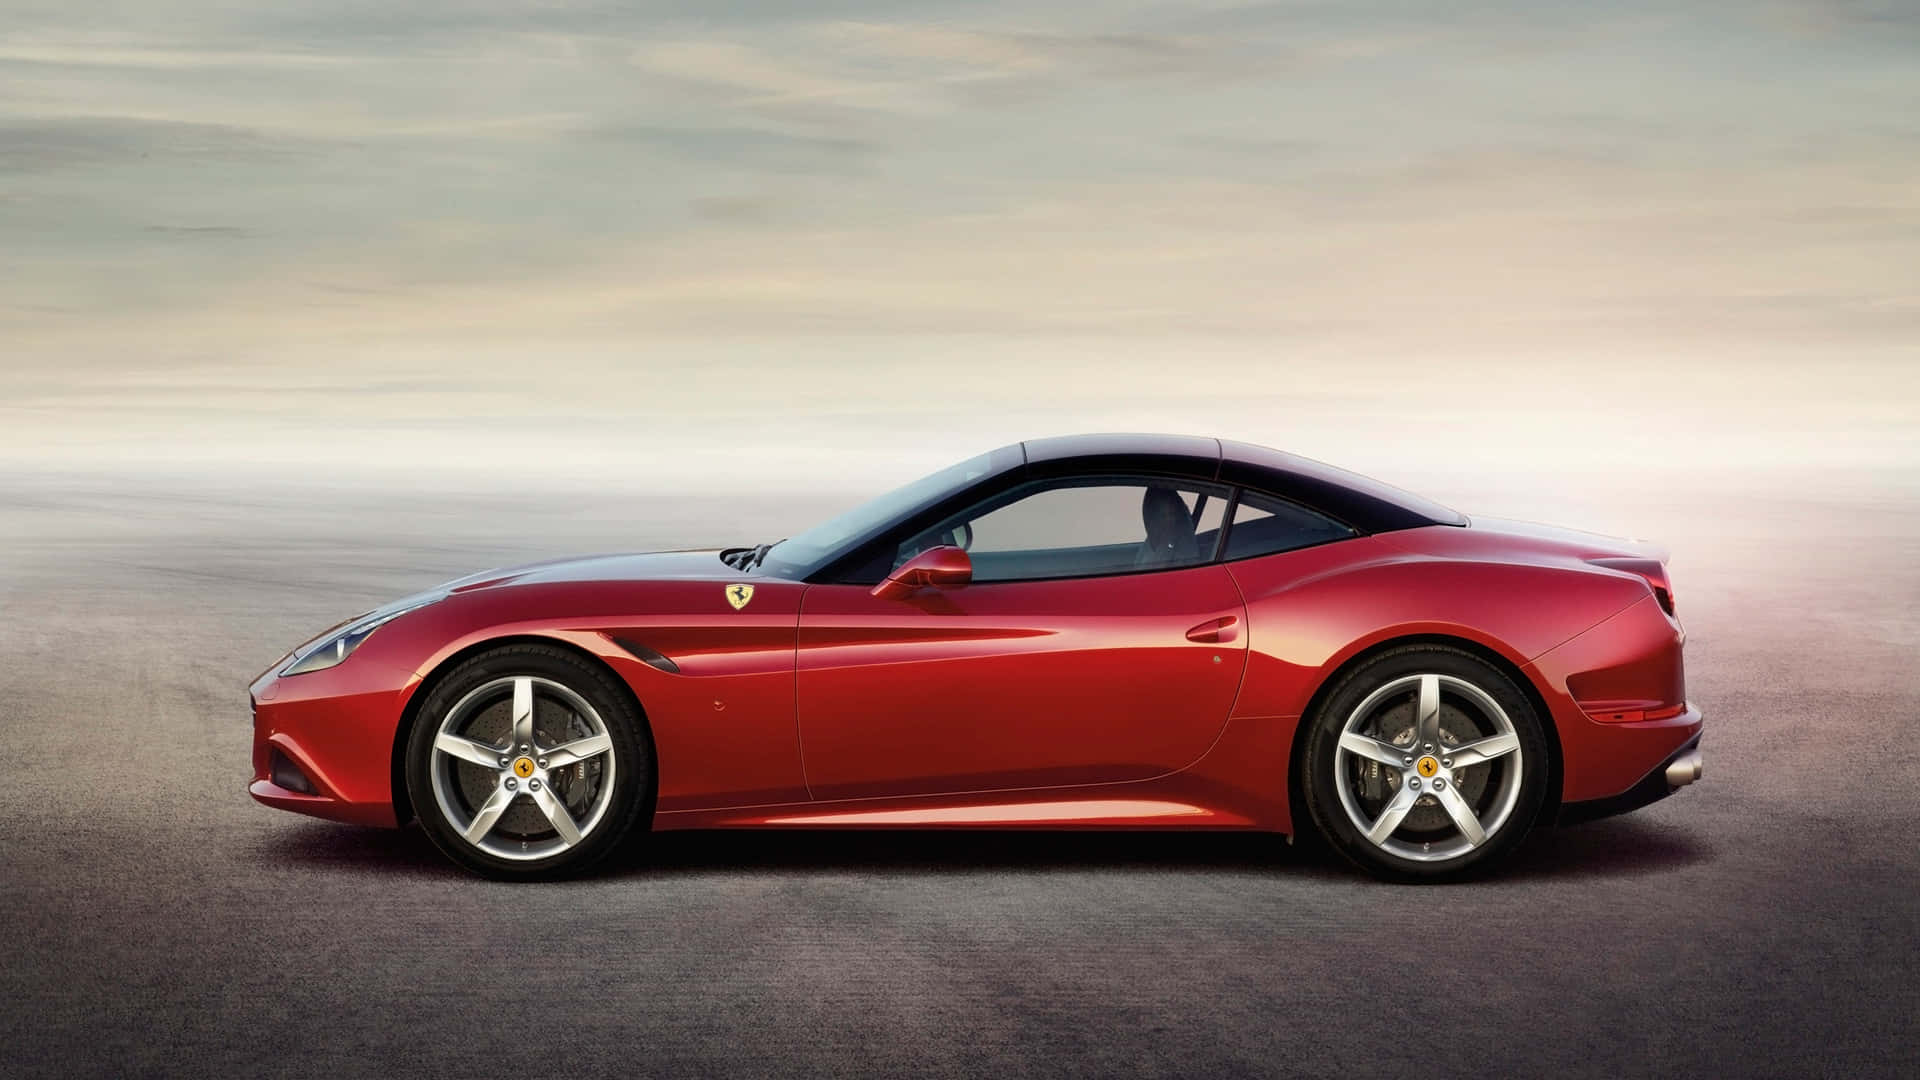 Stunning Ferrari California T in Action Wallpaper